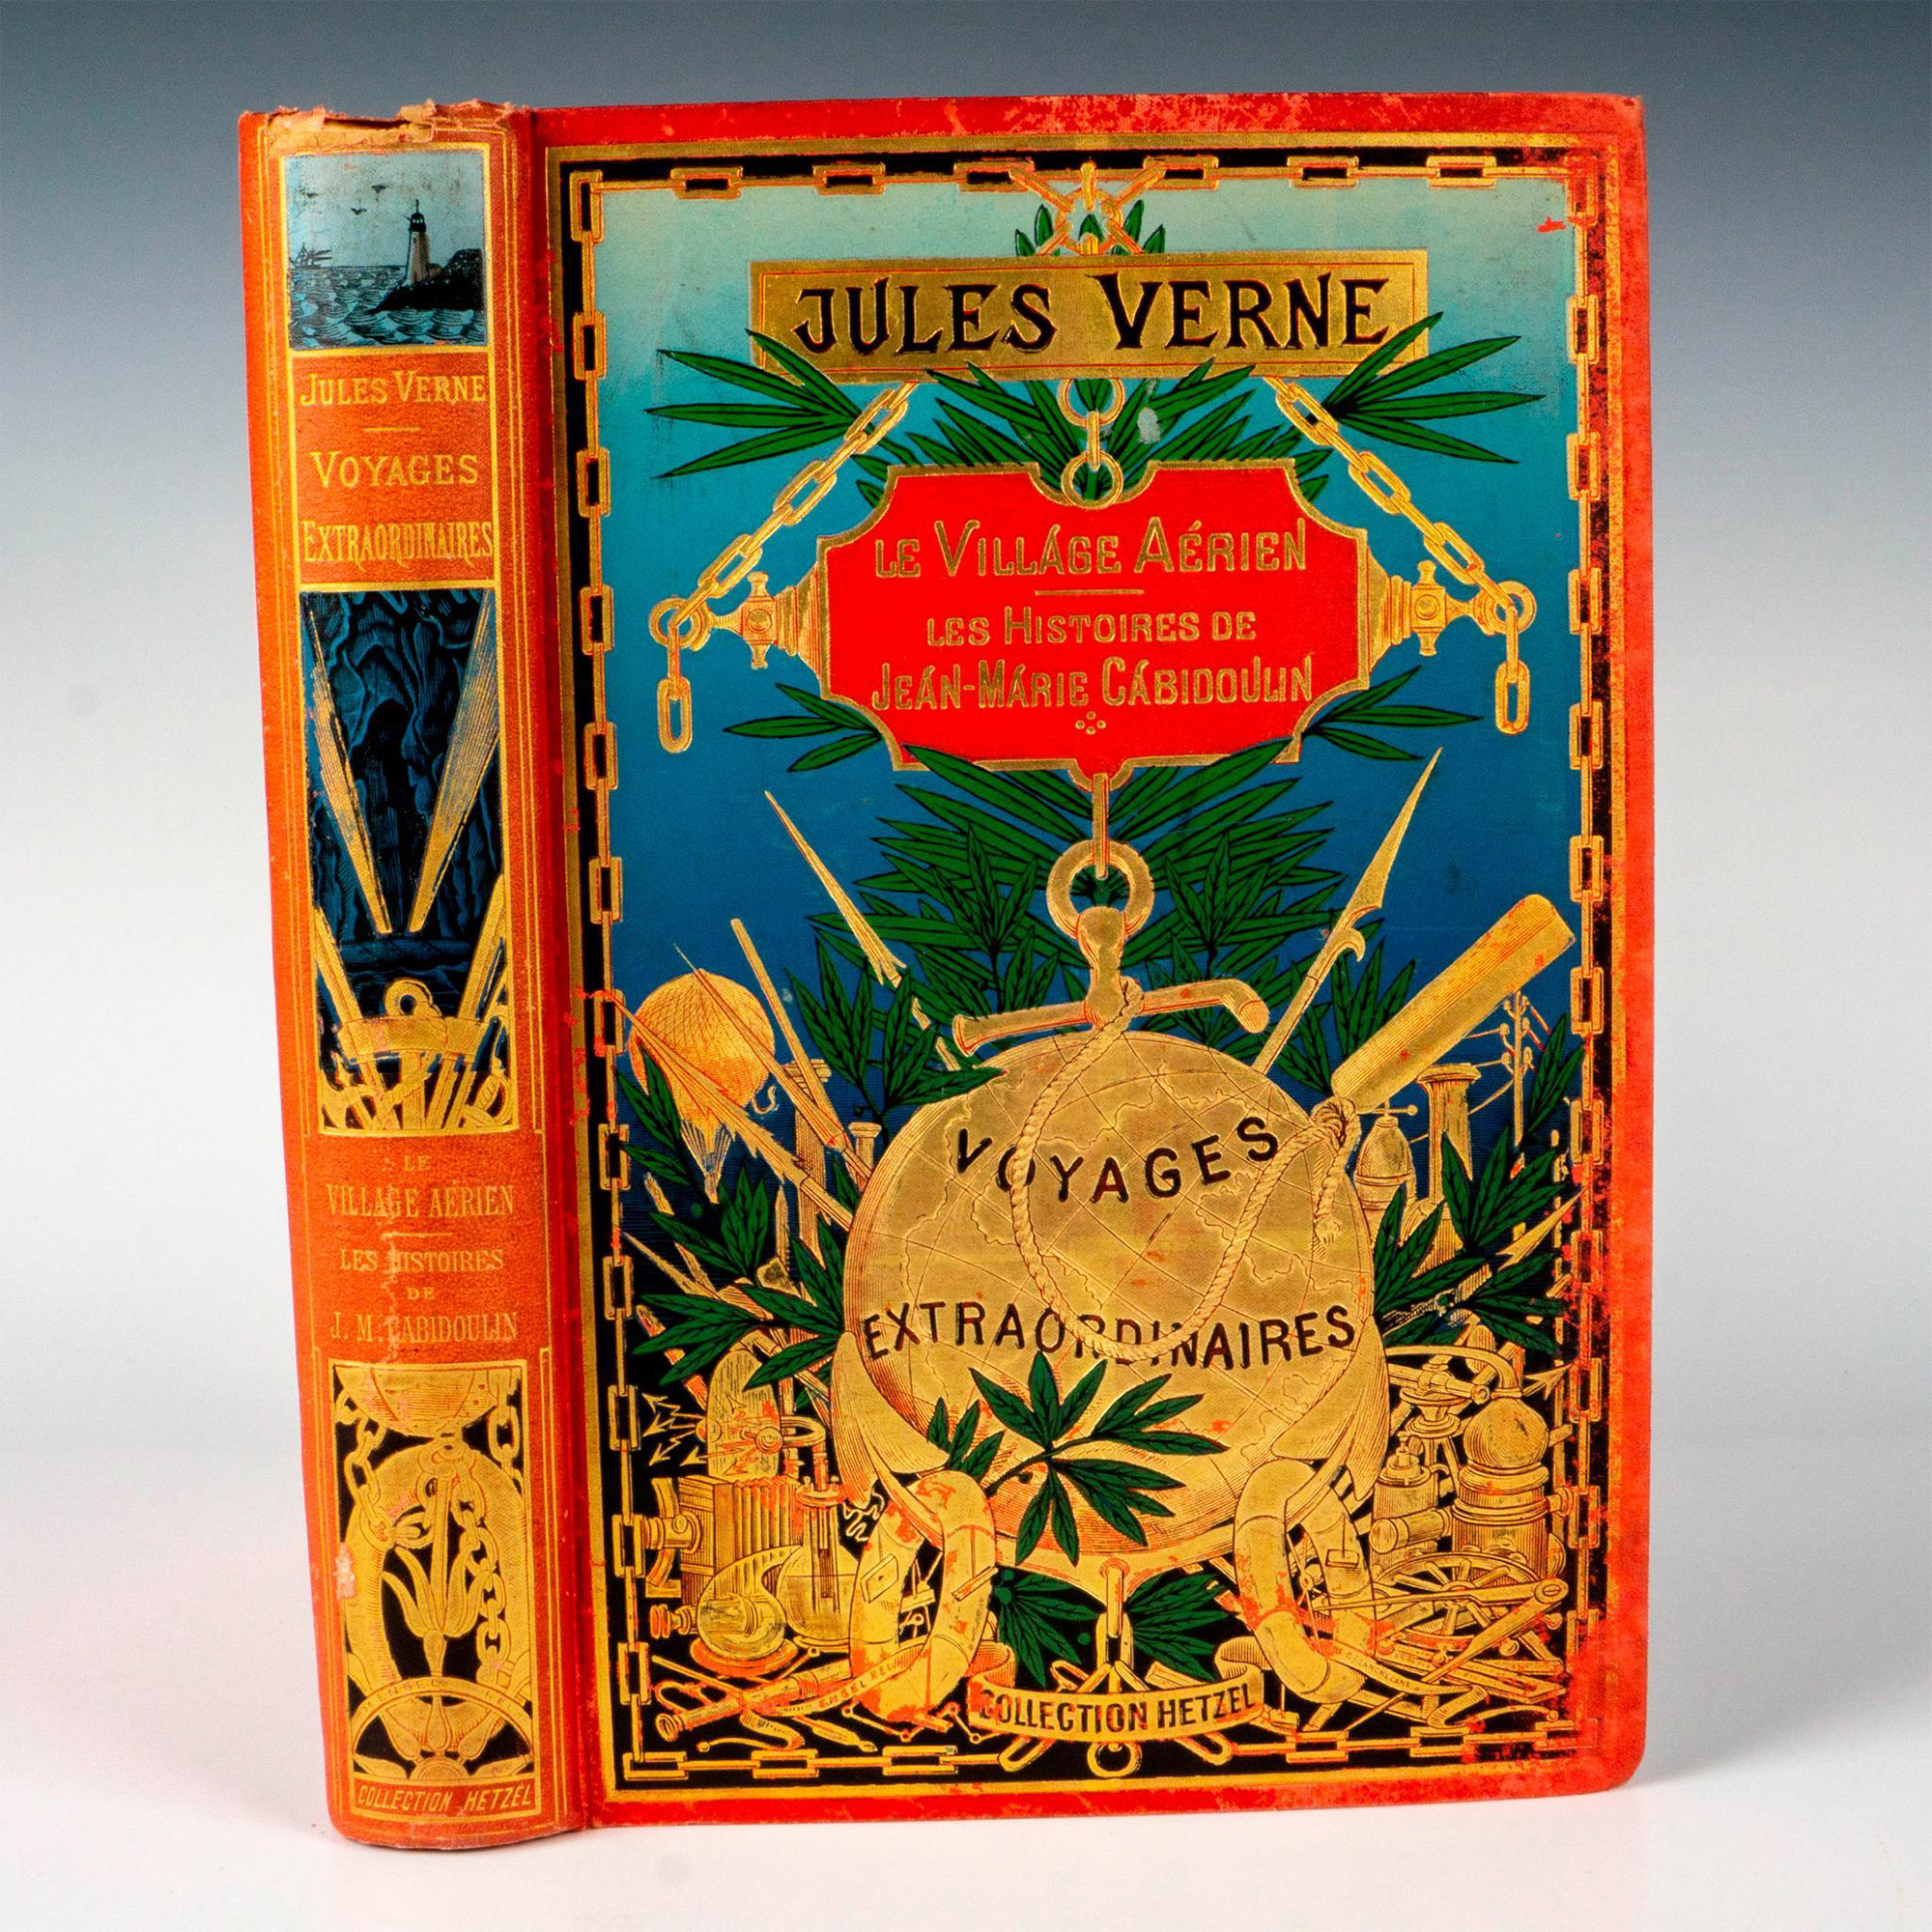 Jules Verne, Le Village Aerien / Jean-Marie Cabidoulin